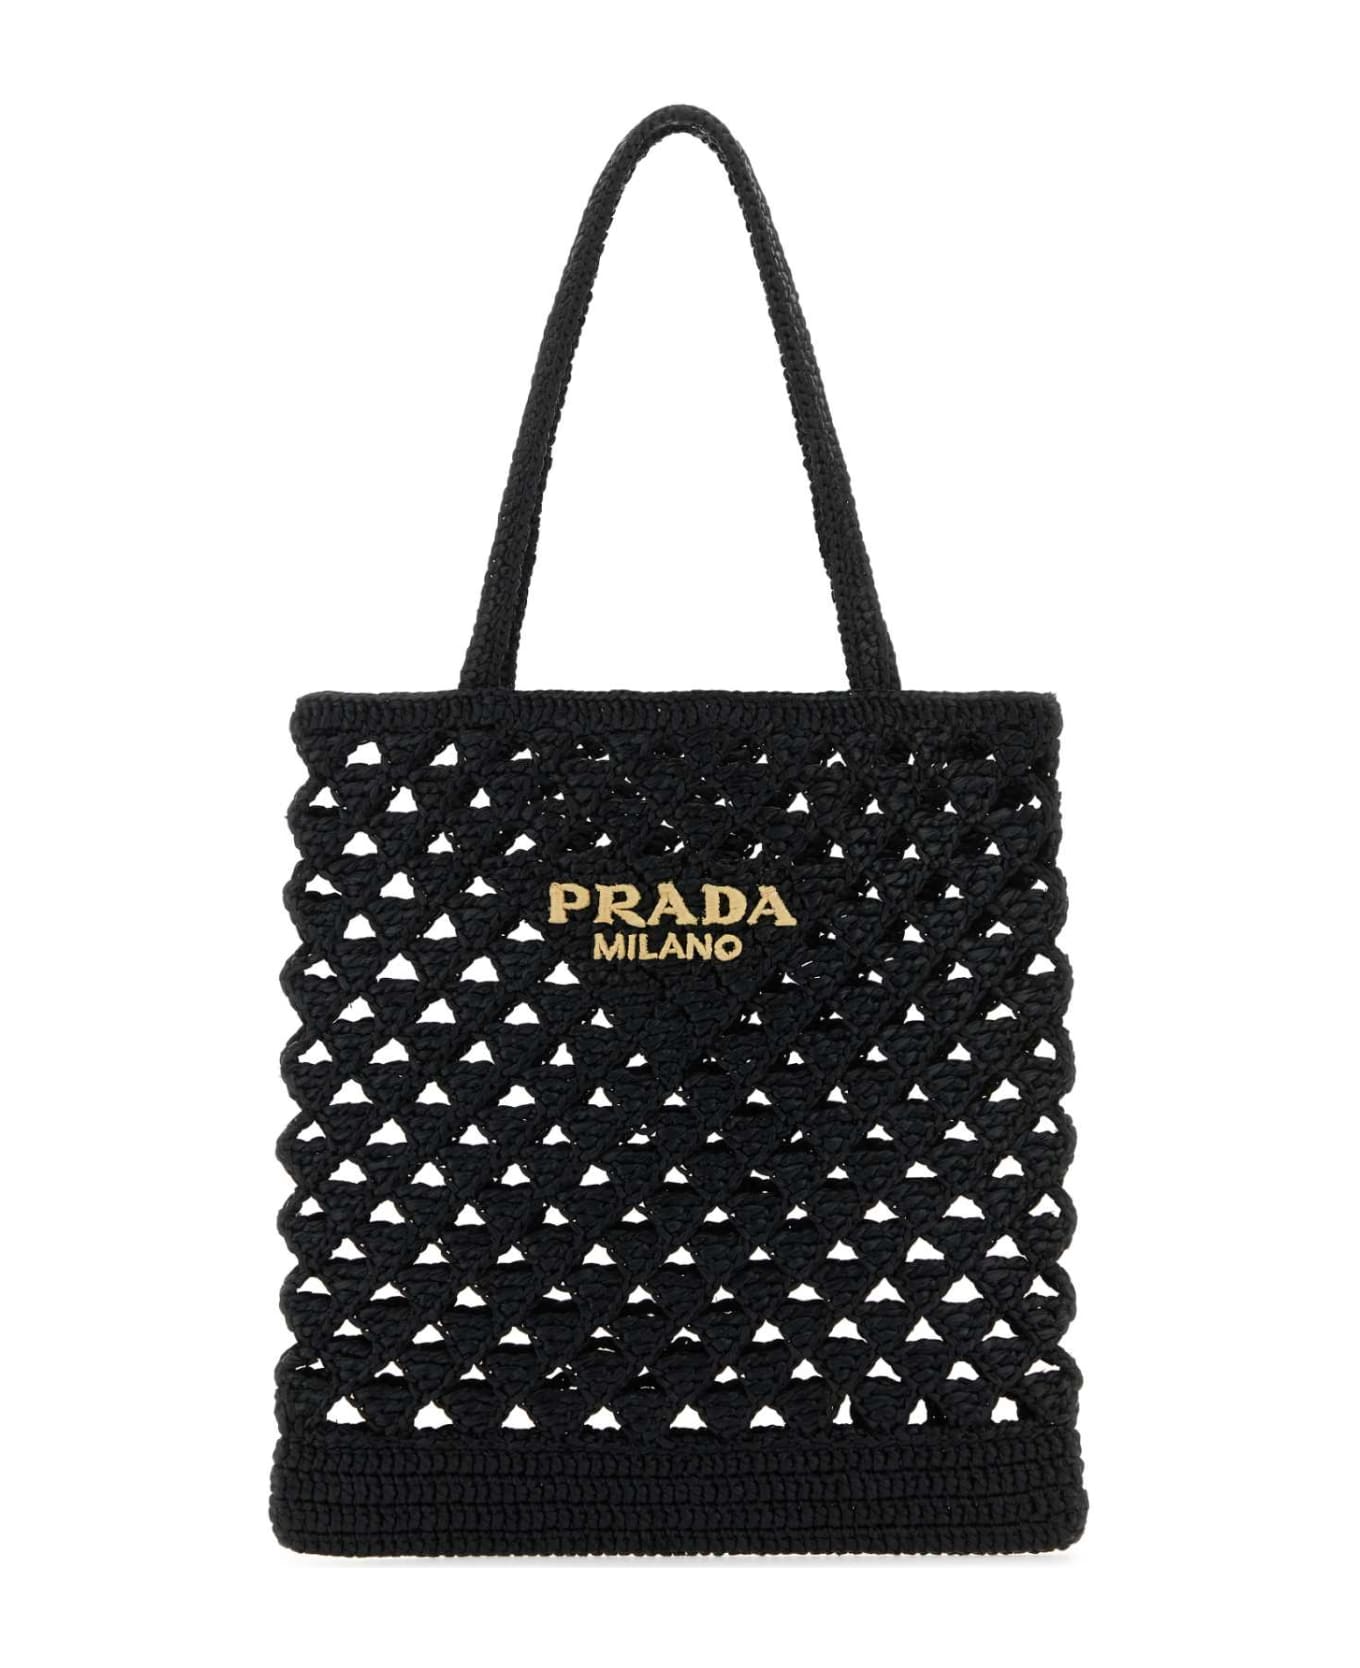 Prada Black Straw Handbag - NEROC